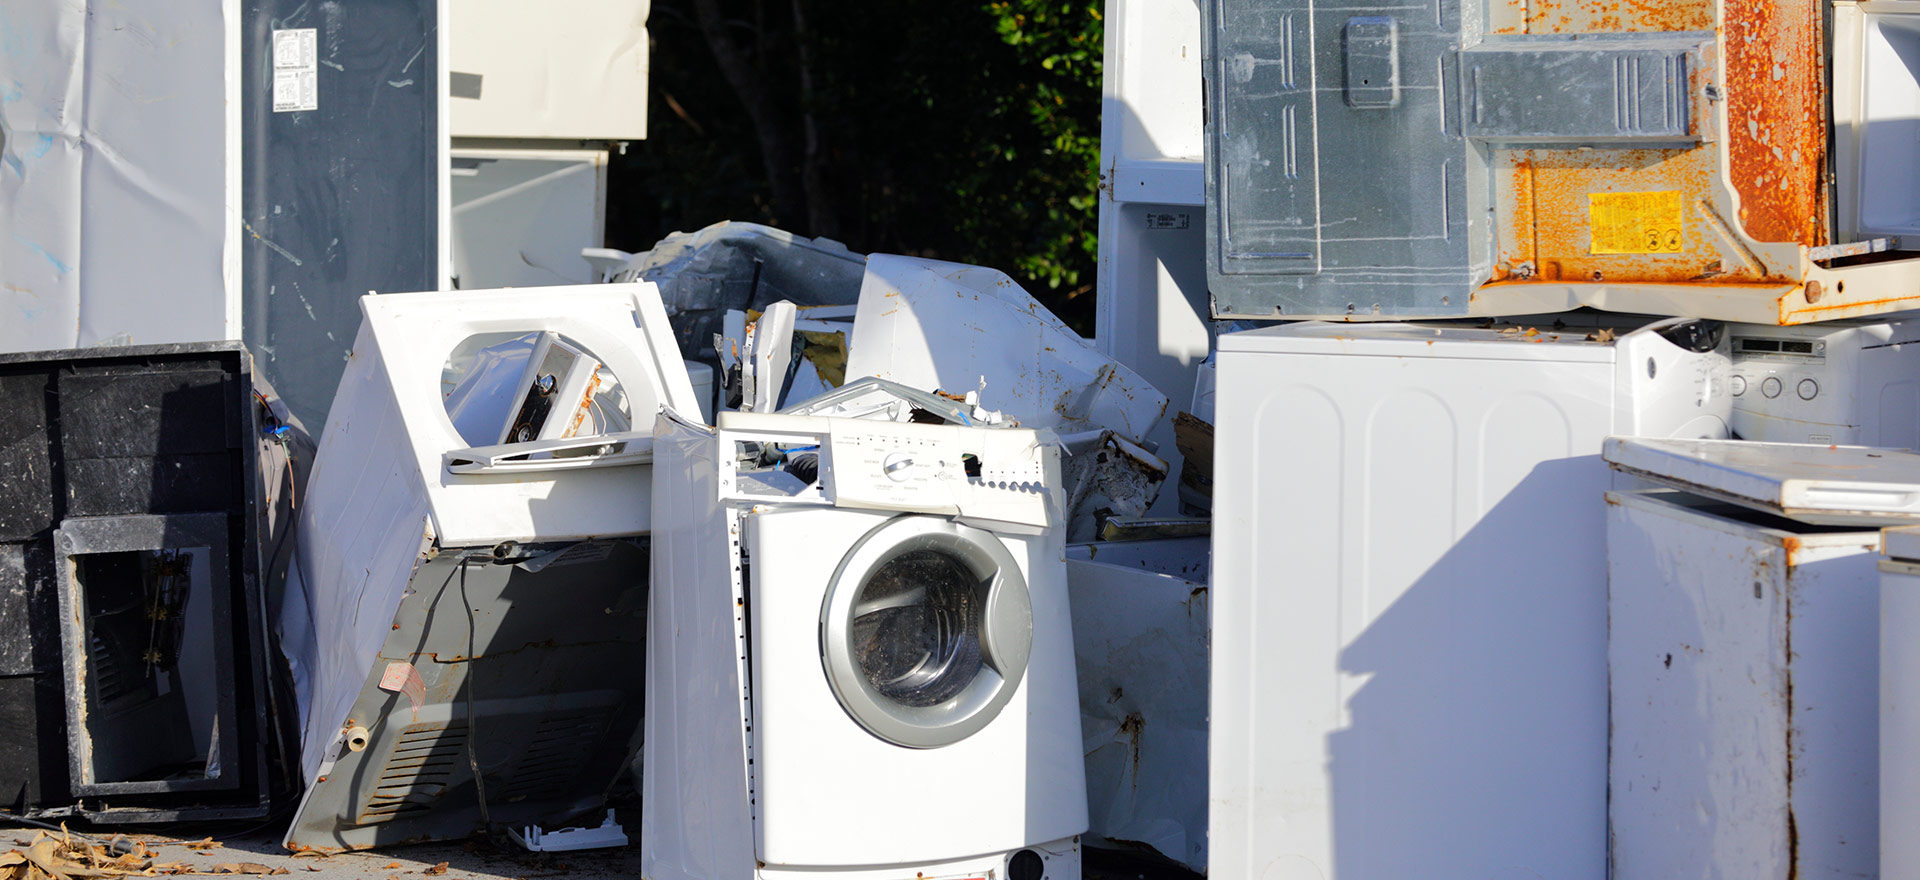 Appliances on Road Needing Appliance Removal in Costa Mesa, Garden Grove, Huntington Beach, Irvine, Long Beach, and Santa Ana